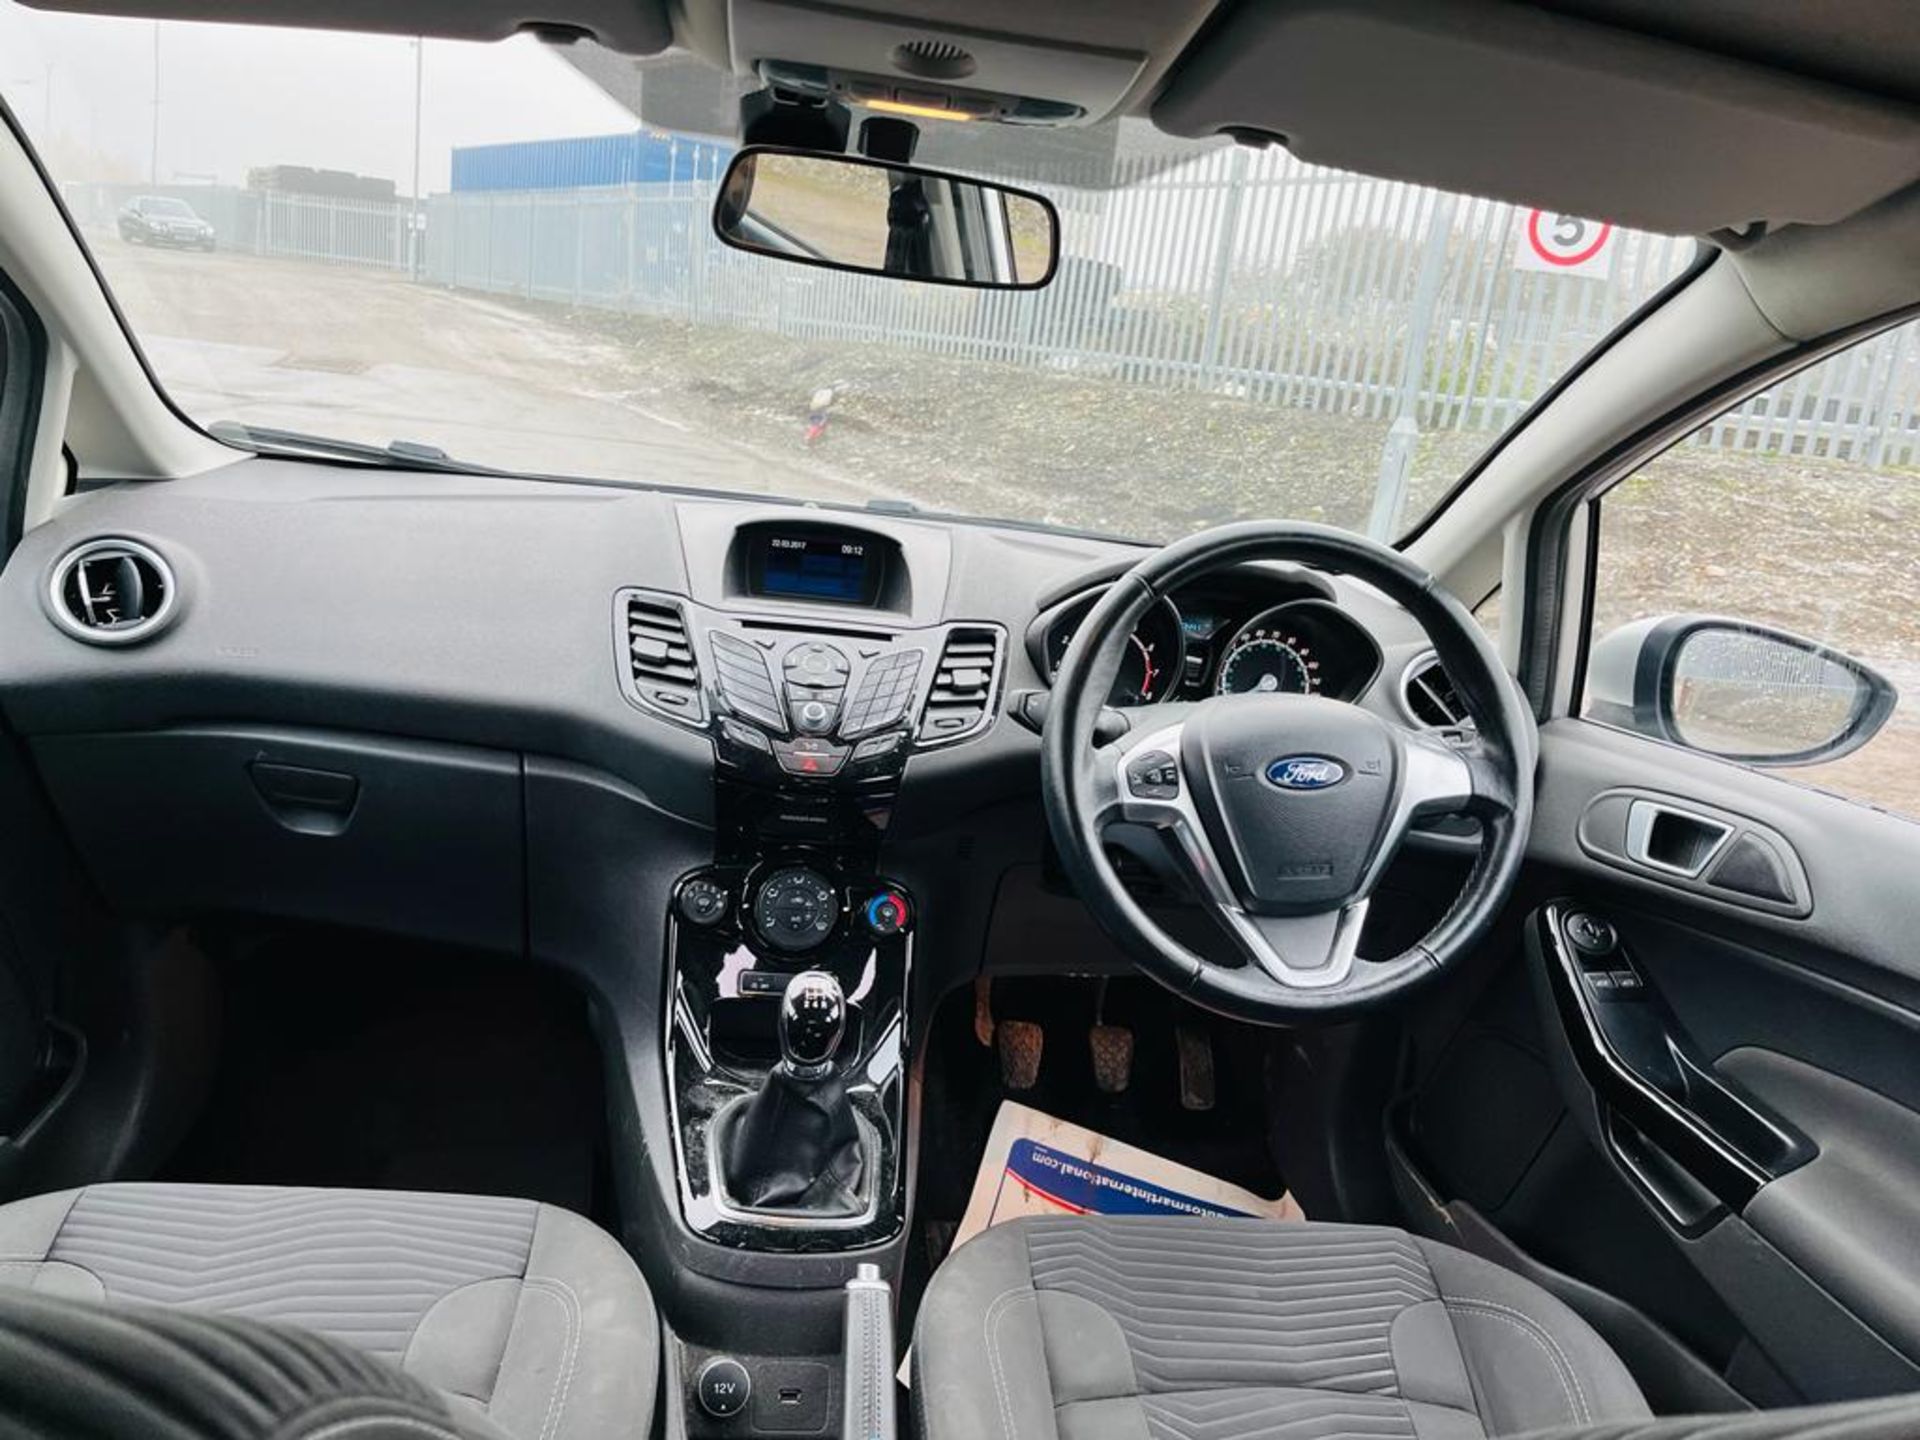 ** ON SALE ** Ford Fiesta 1.0 T EcoBoost Zetec Turbo 2017 '17 Reg' A/C - ULEZ Compliant - Image 17 of 32